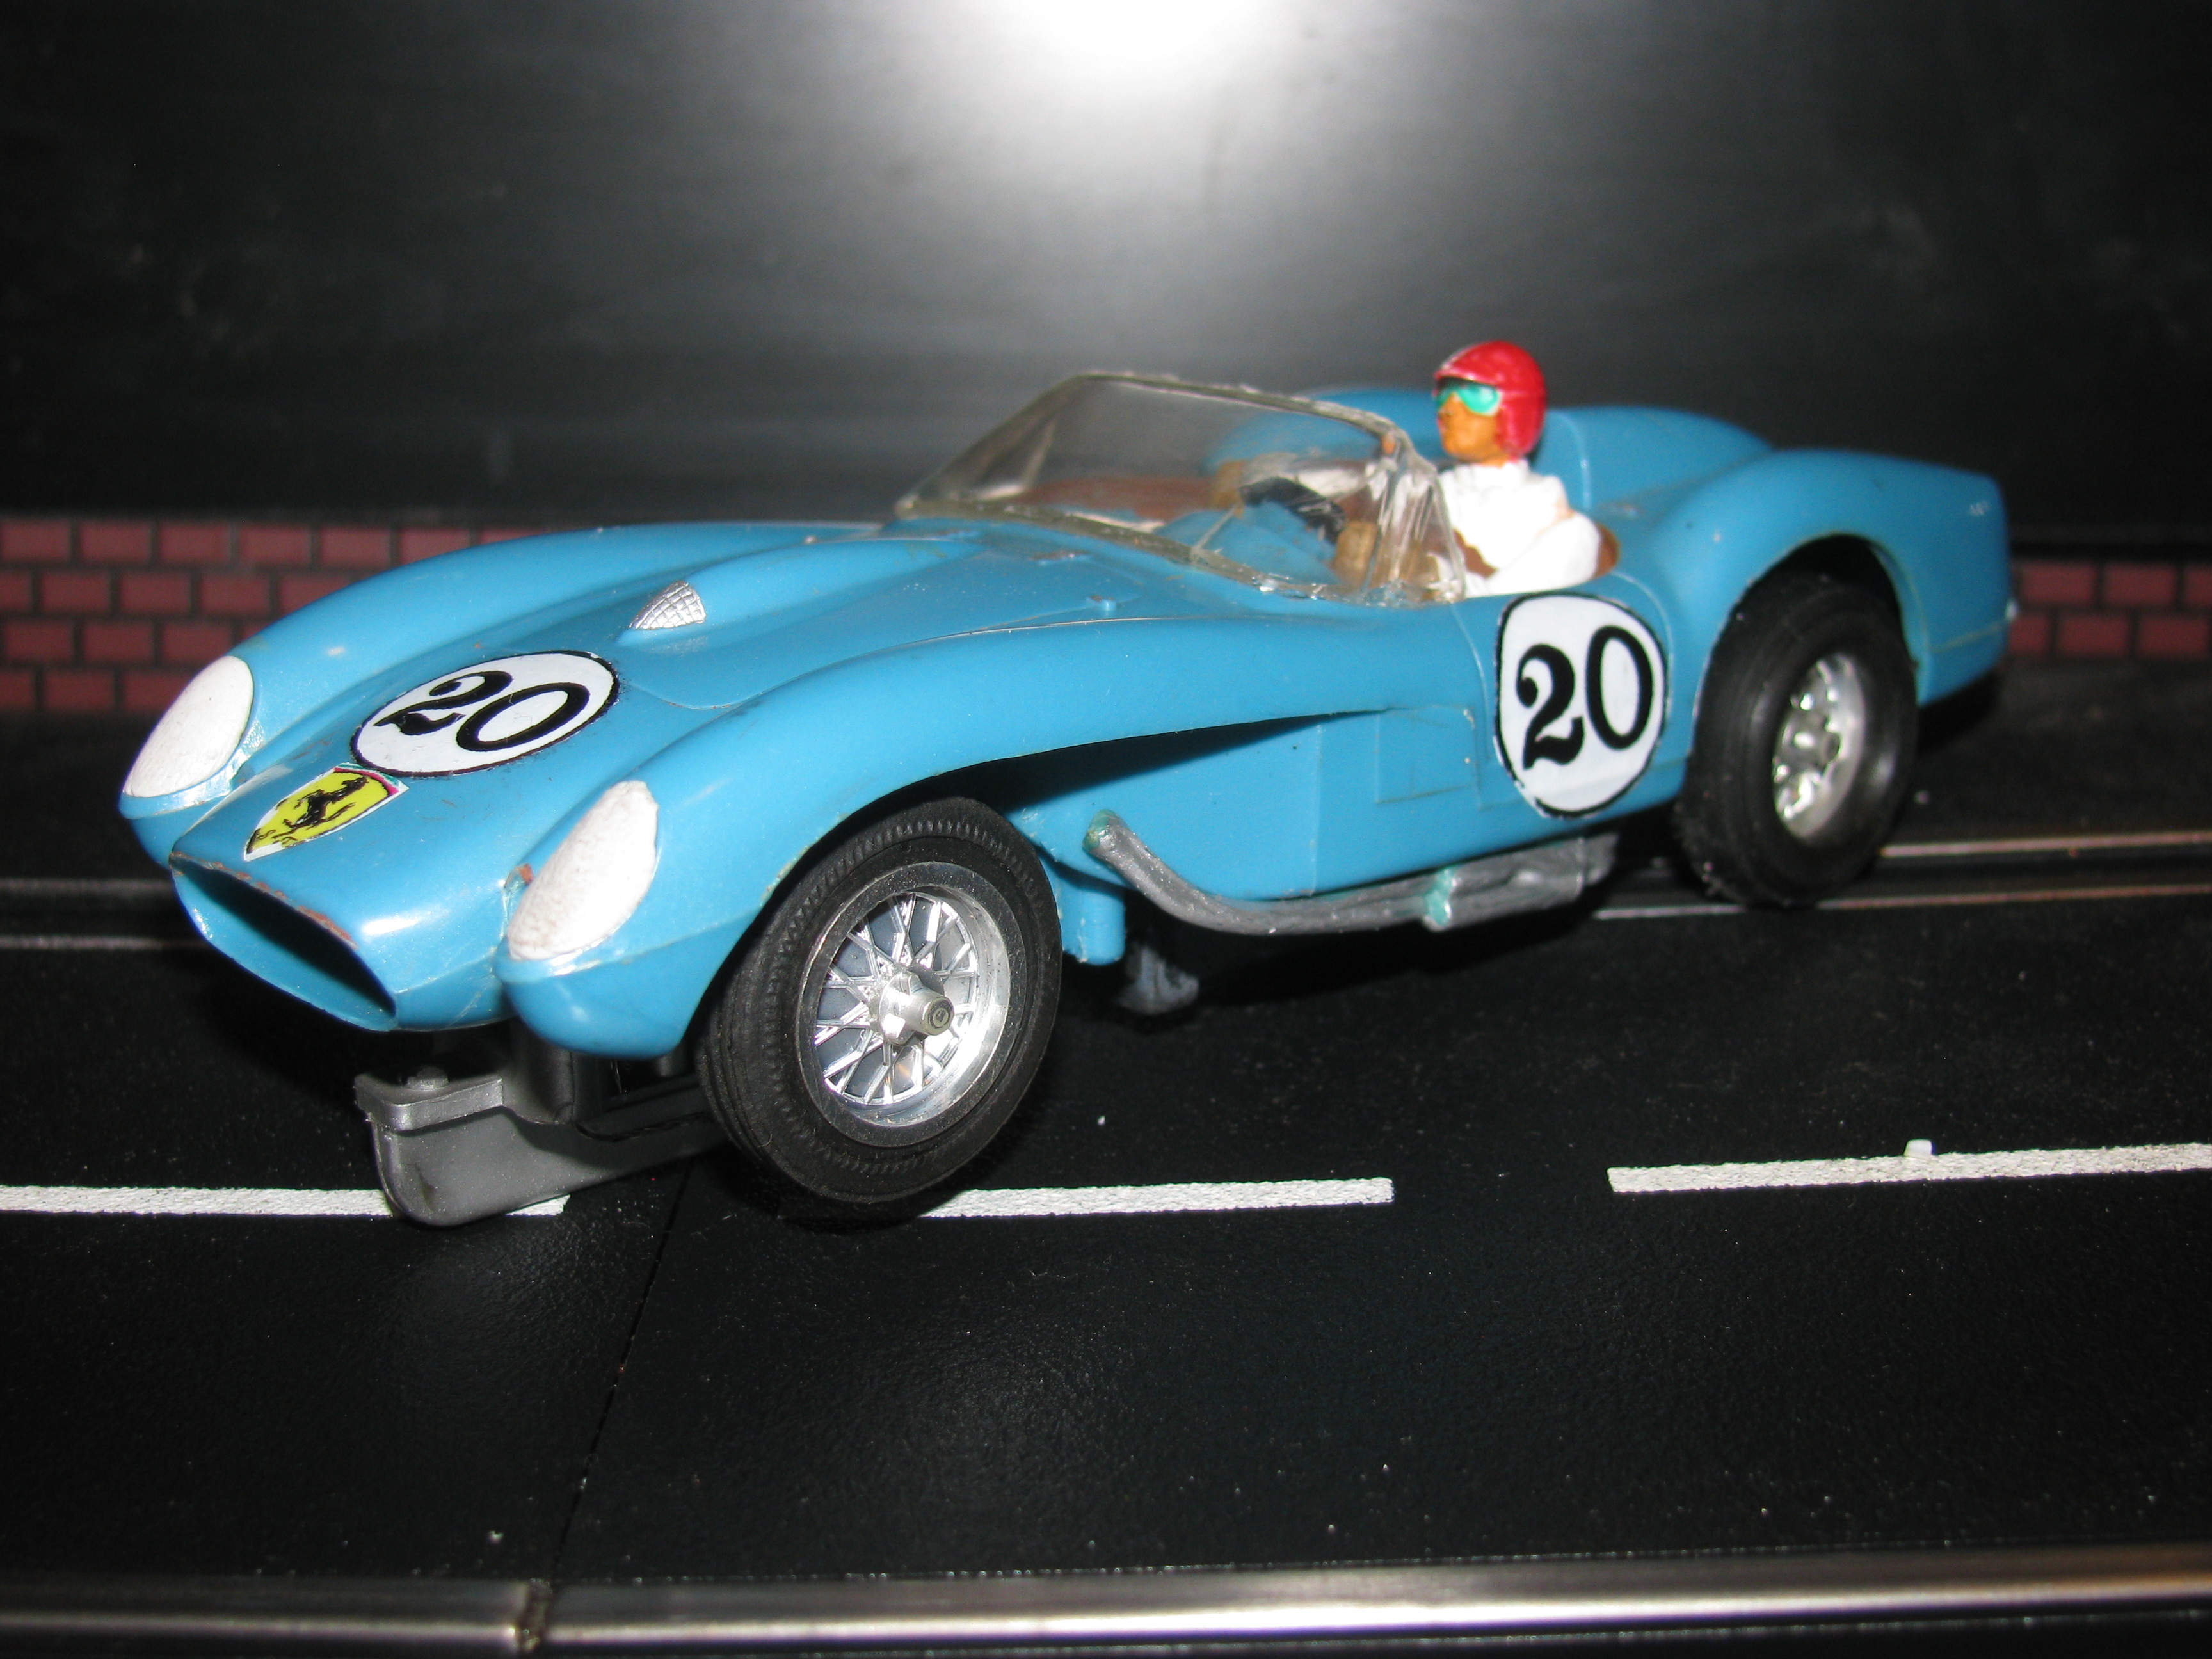 *SOLD* Vintage Ferrari 250 Testa Rossa Slot Car 1/32 Scale – Blue – Car#20